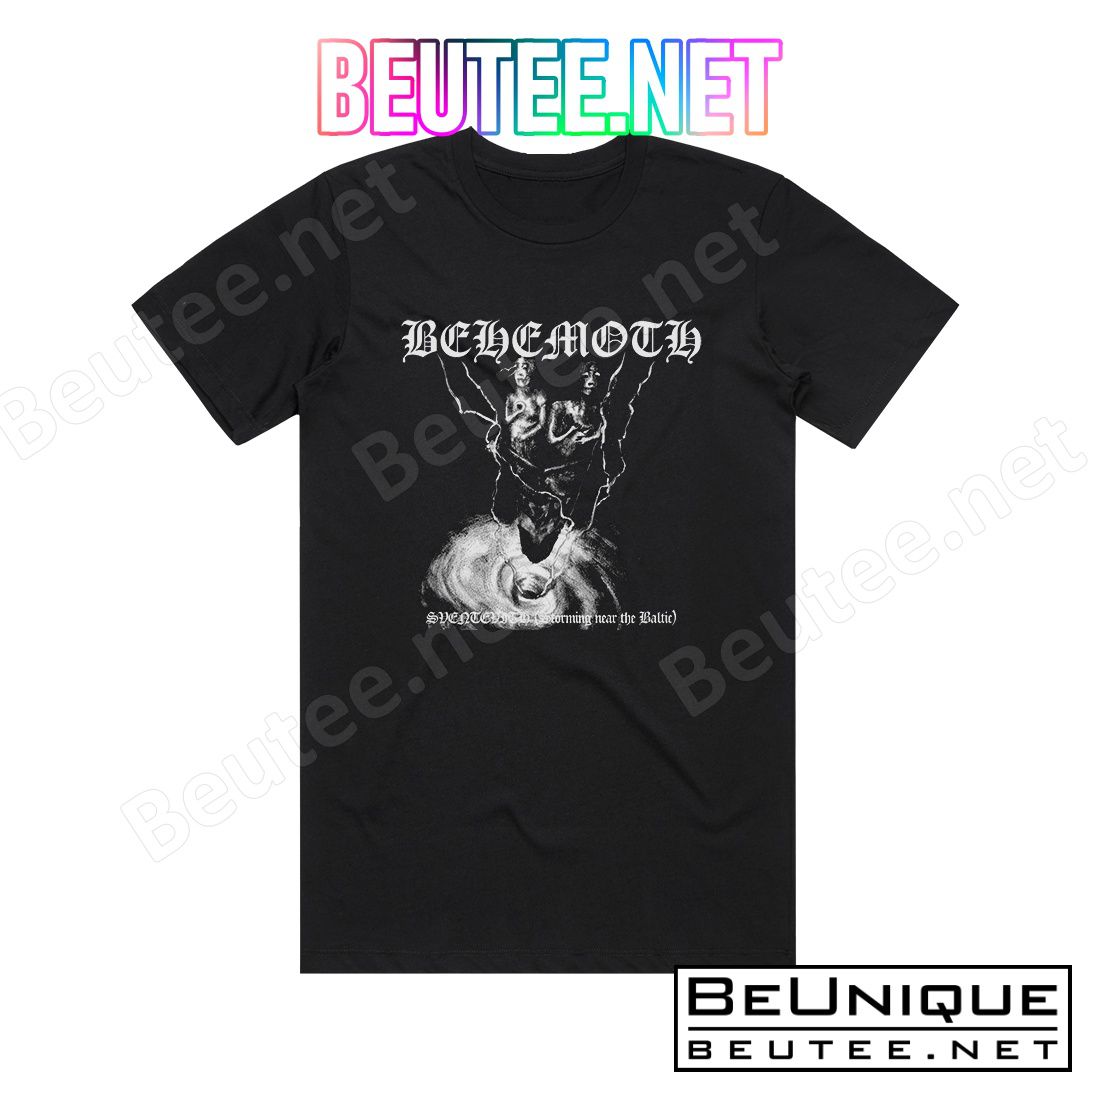 Behemoth Sventevith Storming Near The Baltic 2 Album Cover T-Shirt